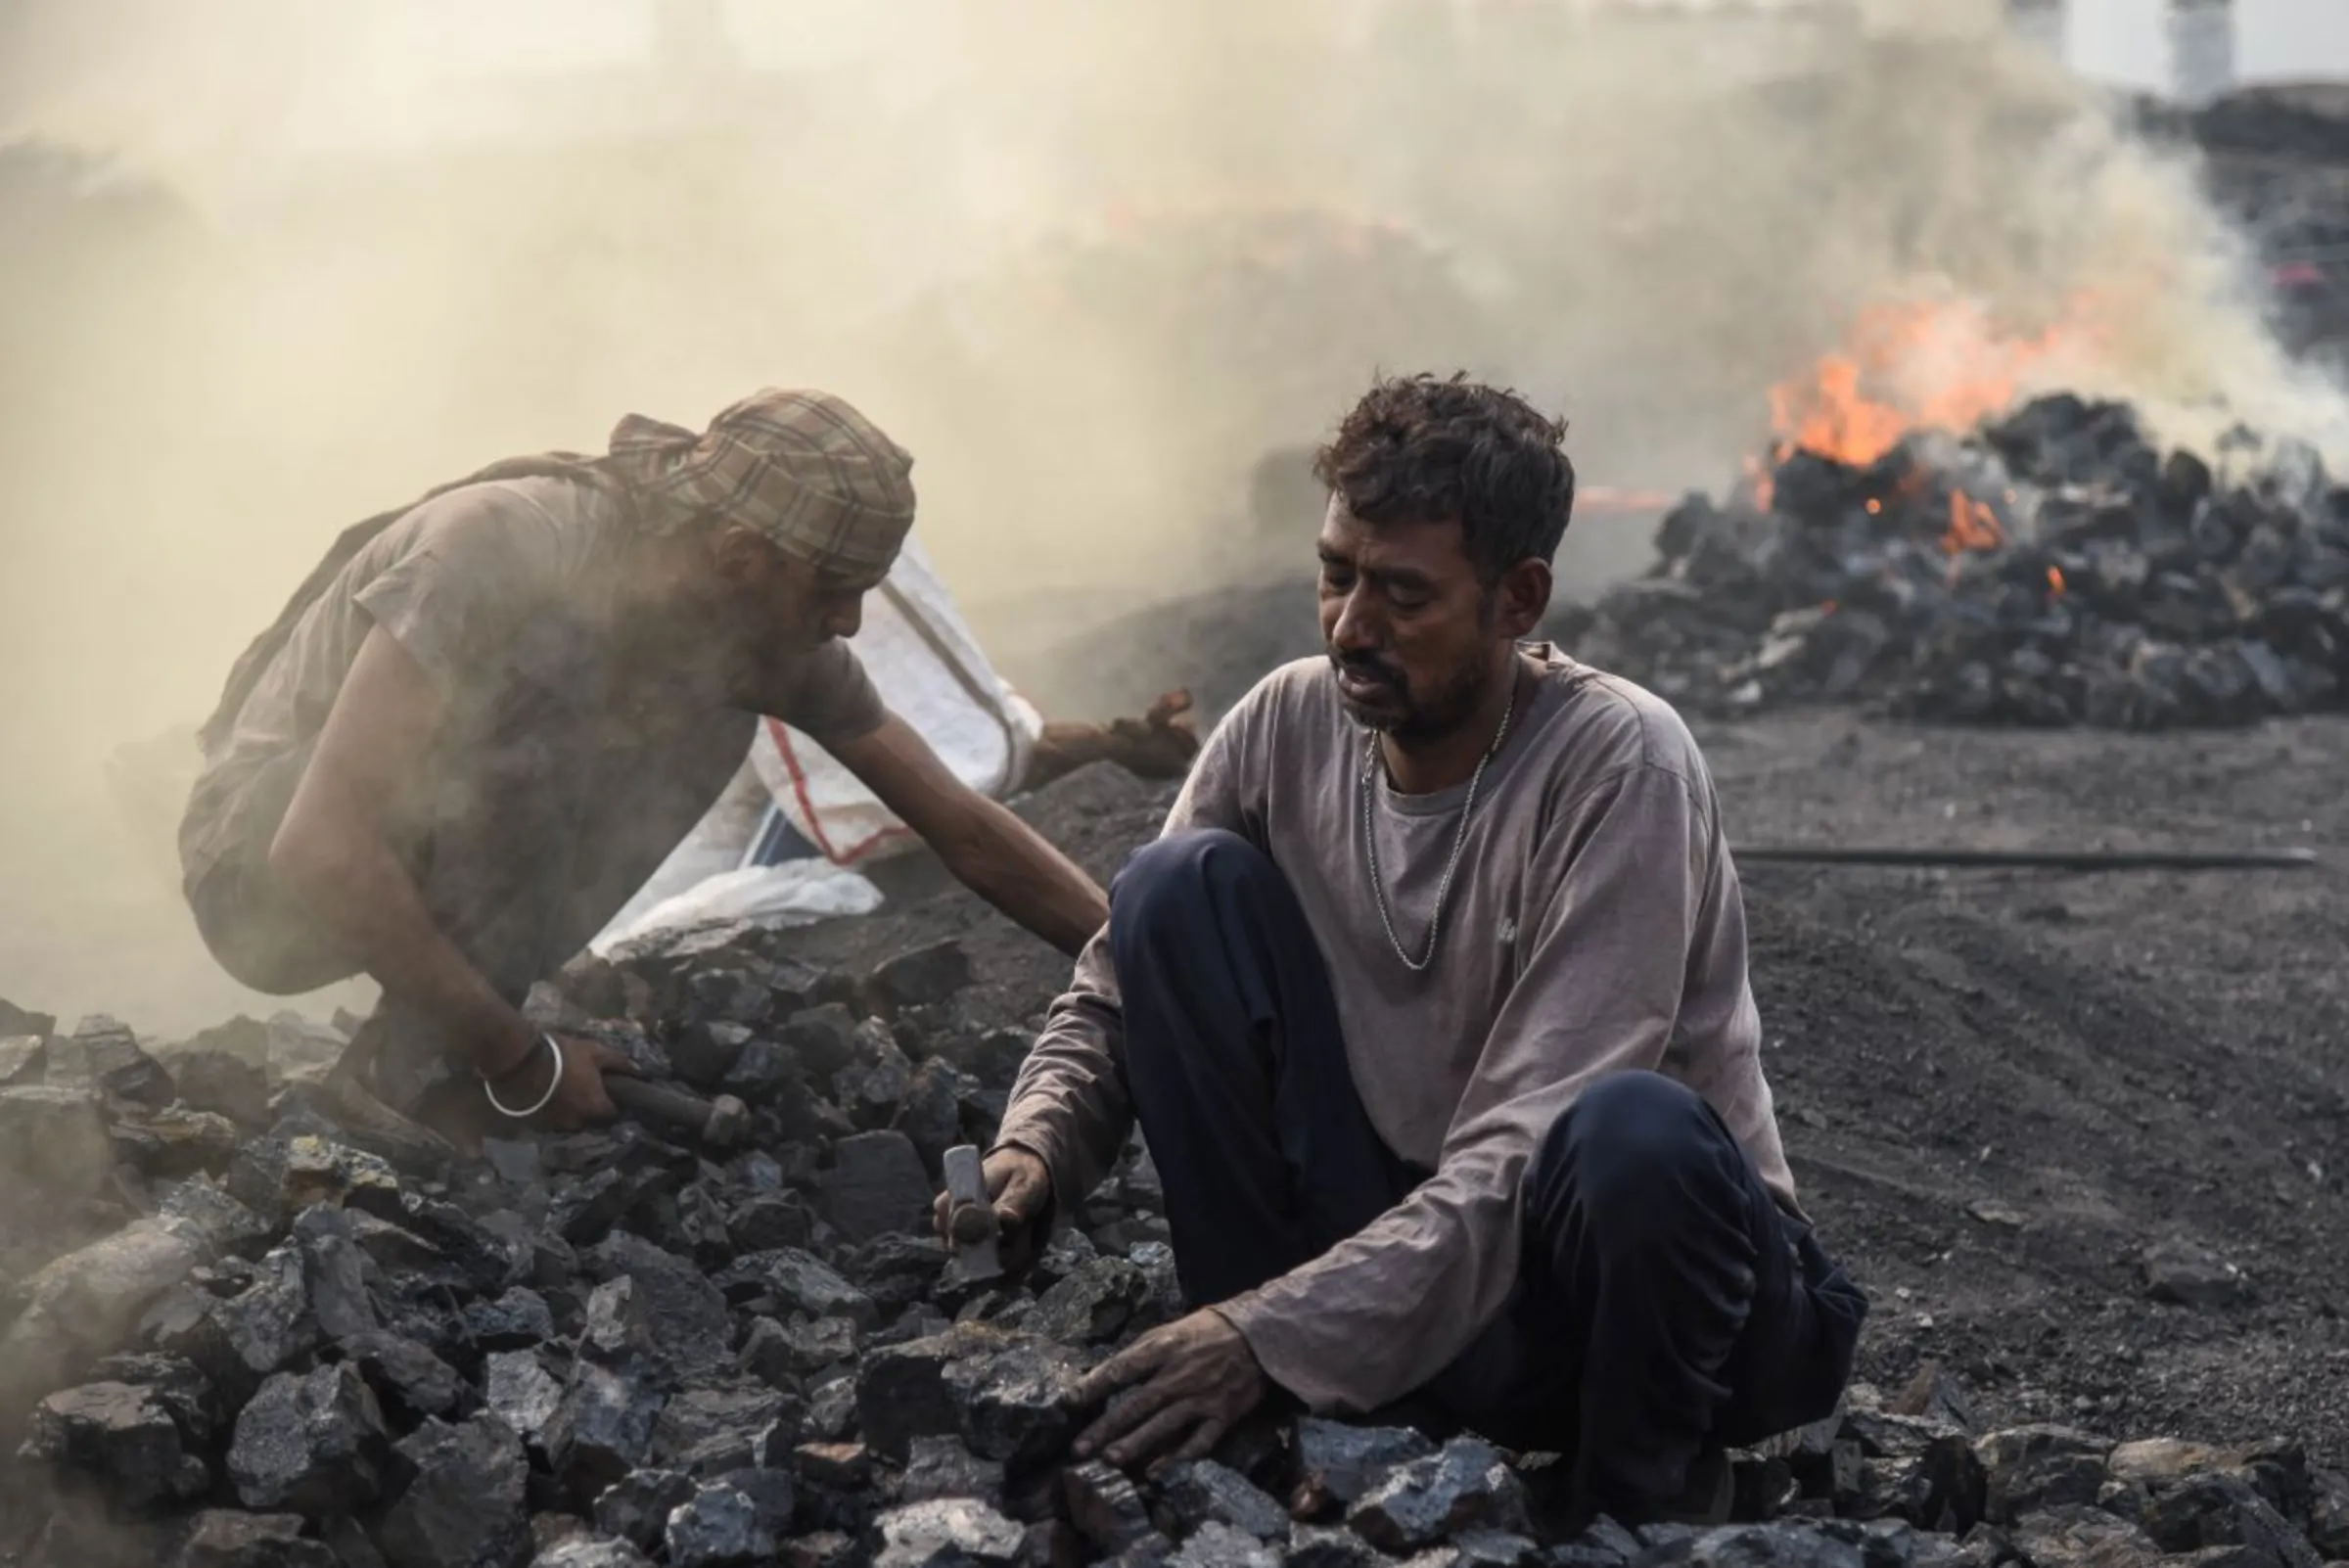 Sanjay Kumar Pandit breaks large rocks of coal into smaller pieces at a burning coalfield in Jharia, India, November 11, 2022. Thomson Reuters Foundation/Tanmoy Bhaduri